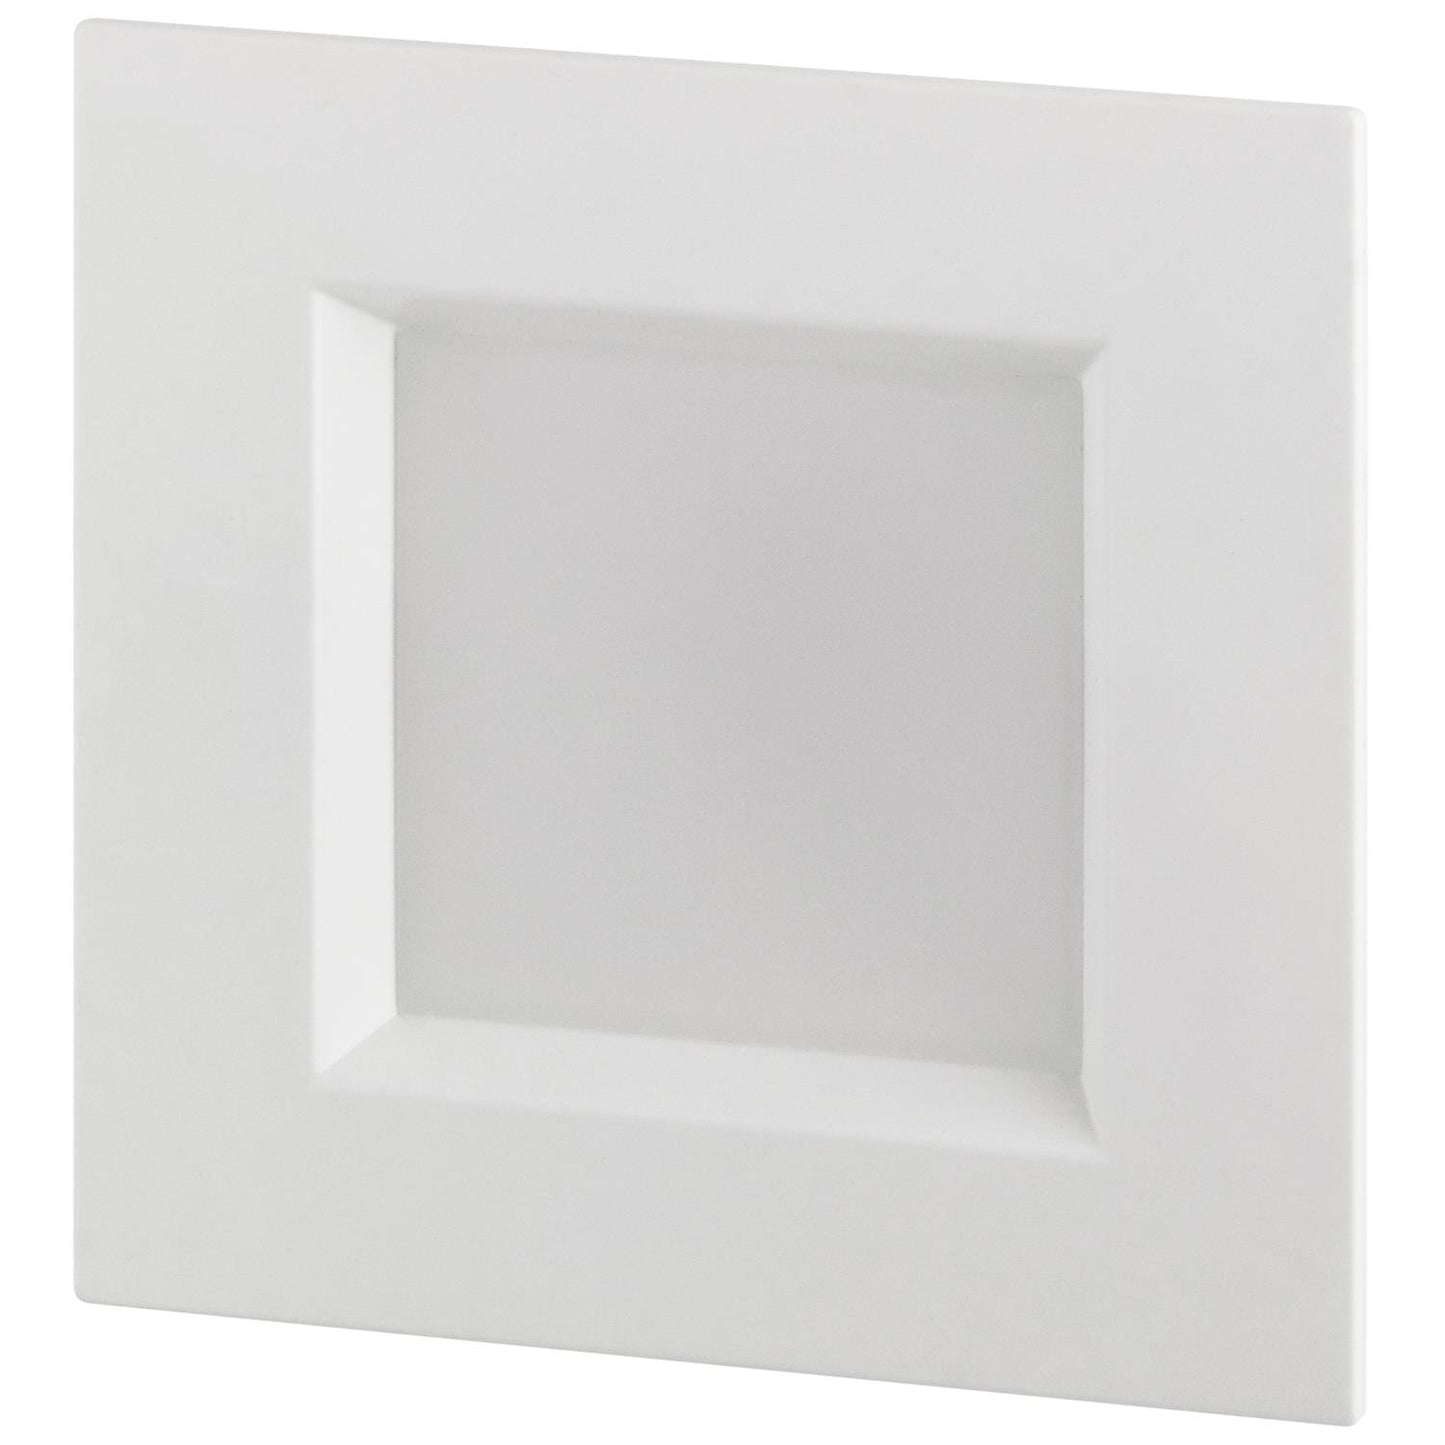 Sunlite LED Retrofit 4-Inch Square Recessed Downlight, Wet Location, Medium Base (E26), 10 Watt, 3000K Warm White